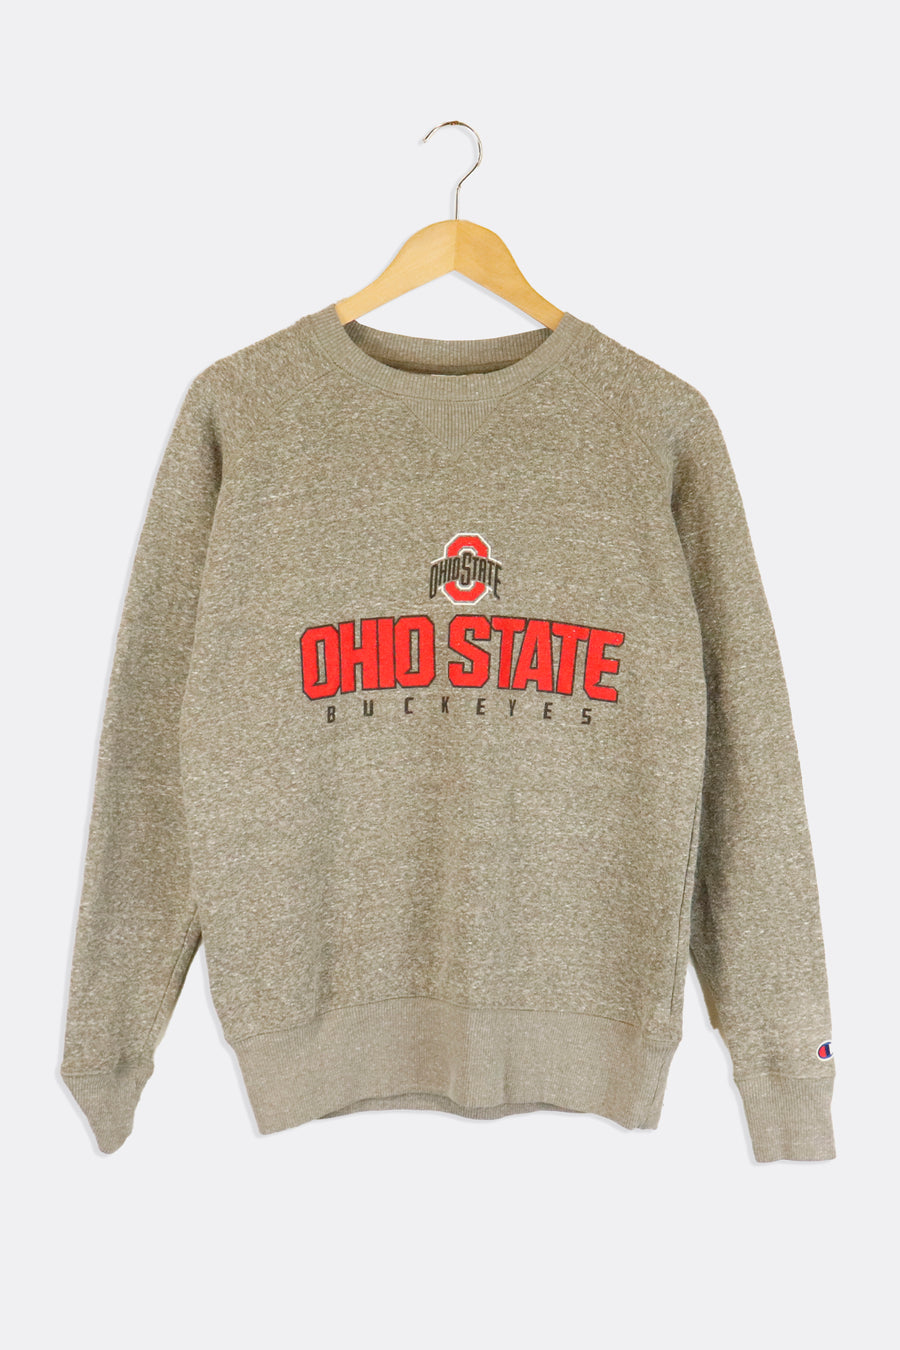 Vintage NCAA Ohio State Buckeyes Logo And Large Red Font Sweatshirt Sz S